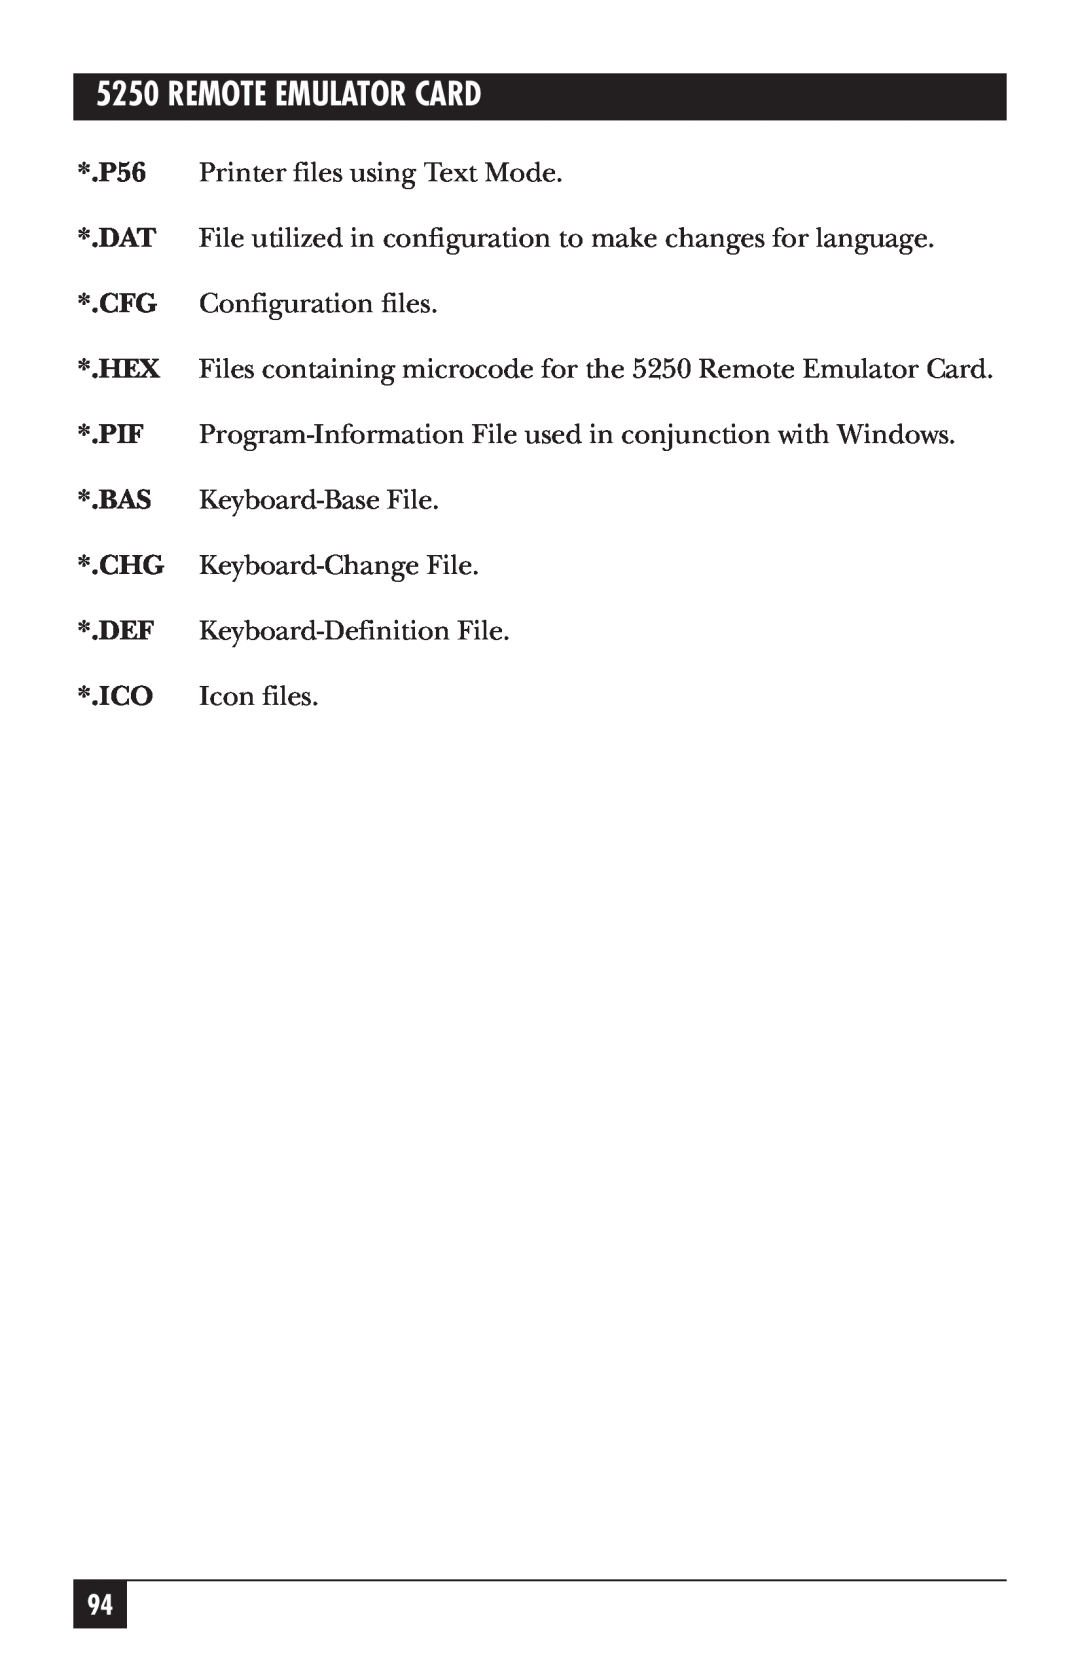 Black Box 5250 Remote Emulator Card, Printer files using Text Mode, Configuration files, Keyboard-BaseFile, Icon files 